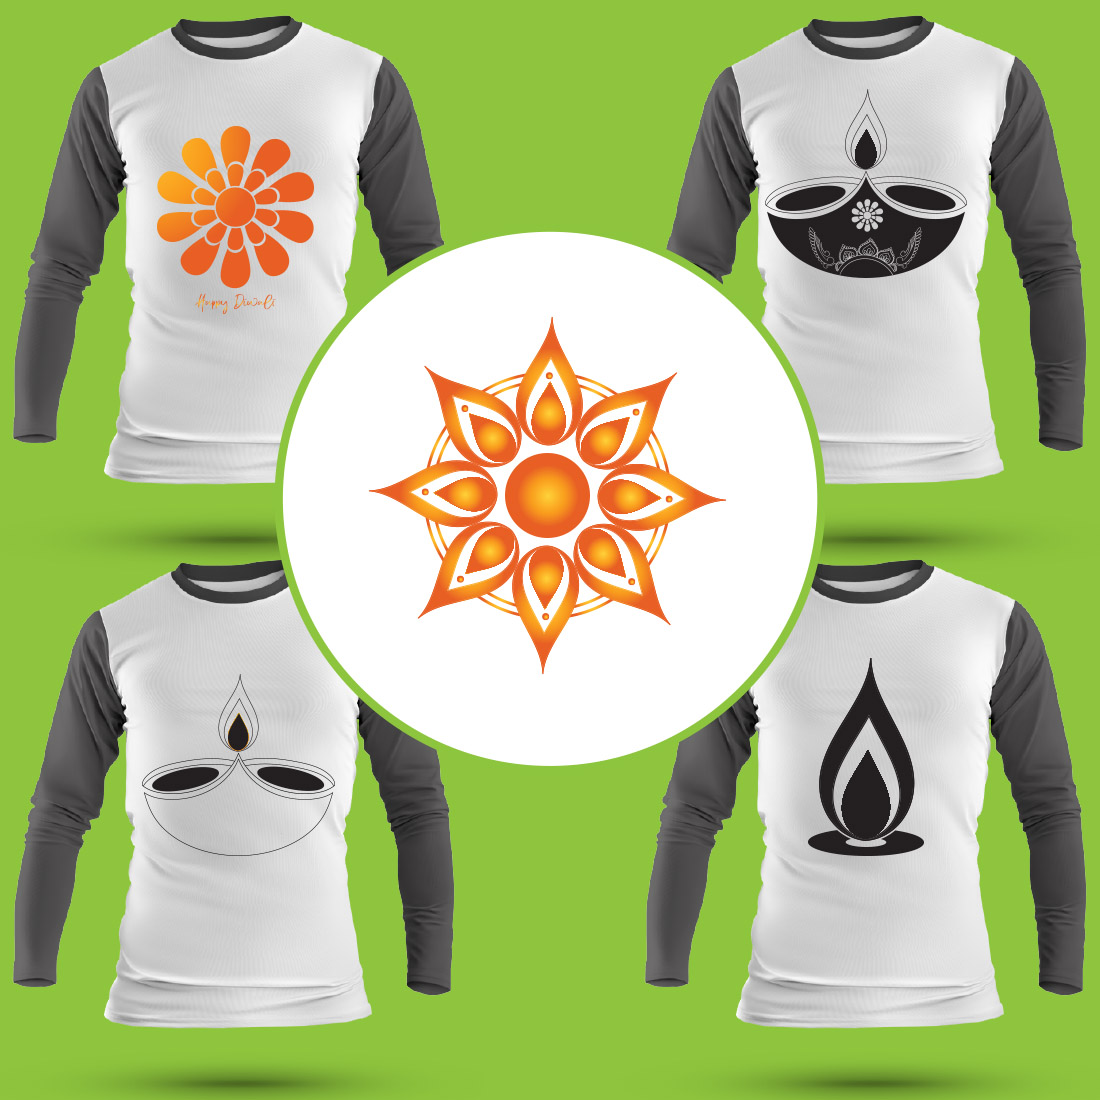 Diwali SVG T Shirt Designs Bundle preview image.